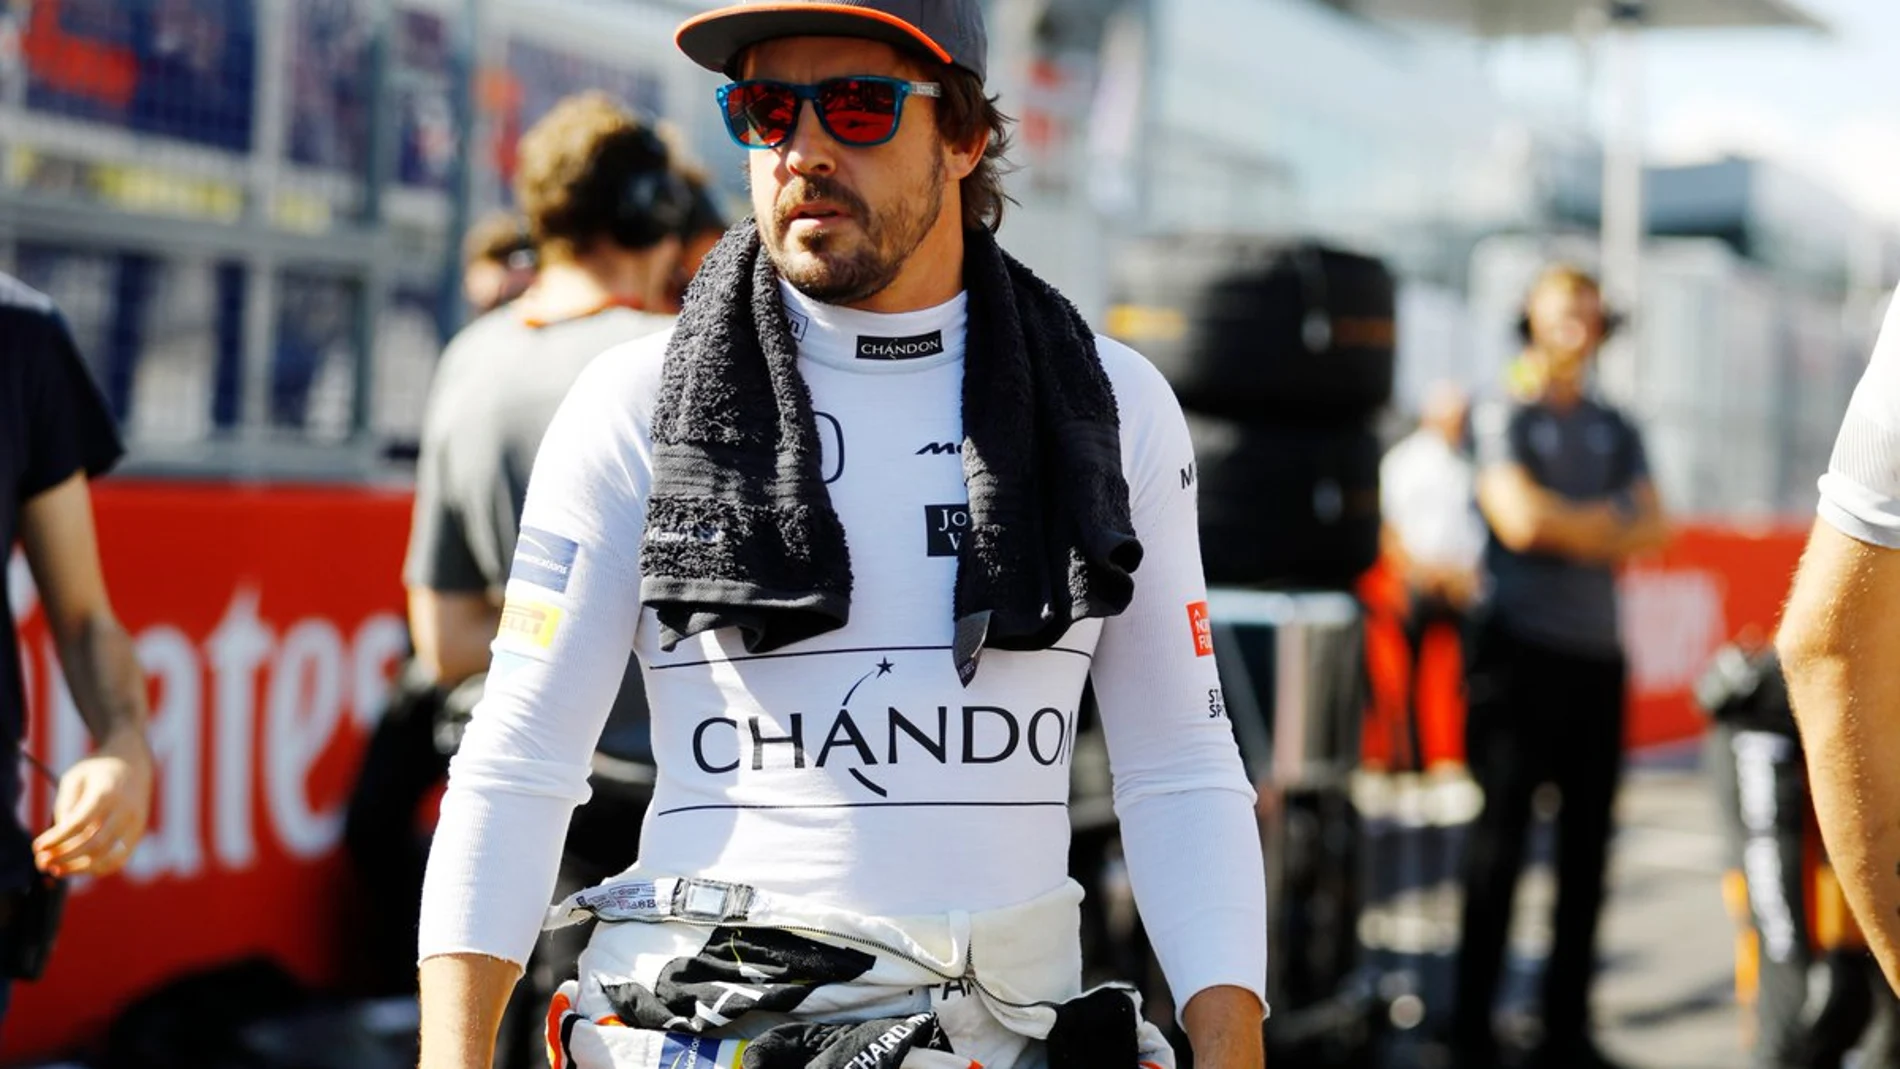 Fernando Alonso en el paddock